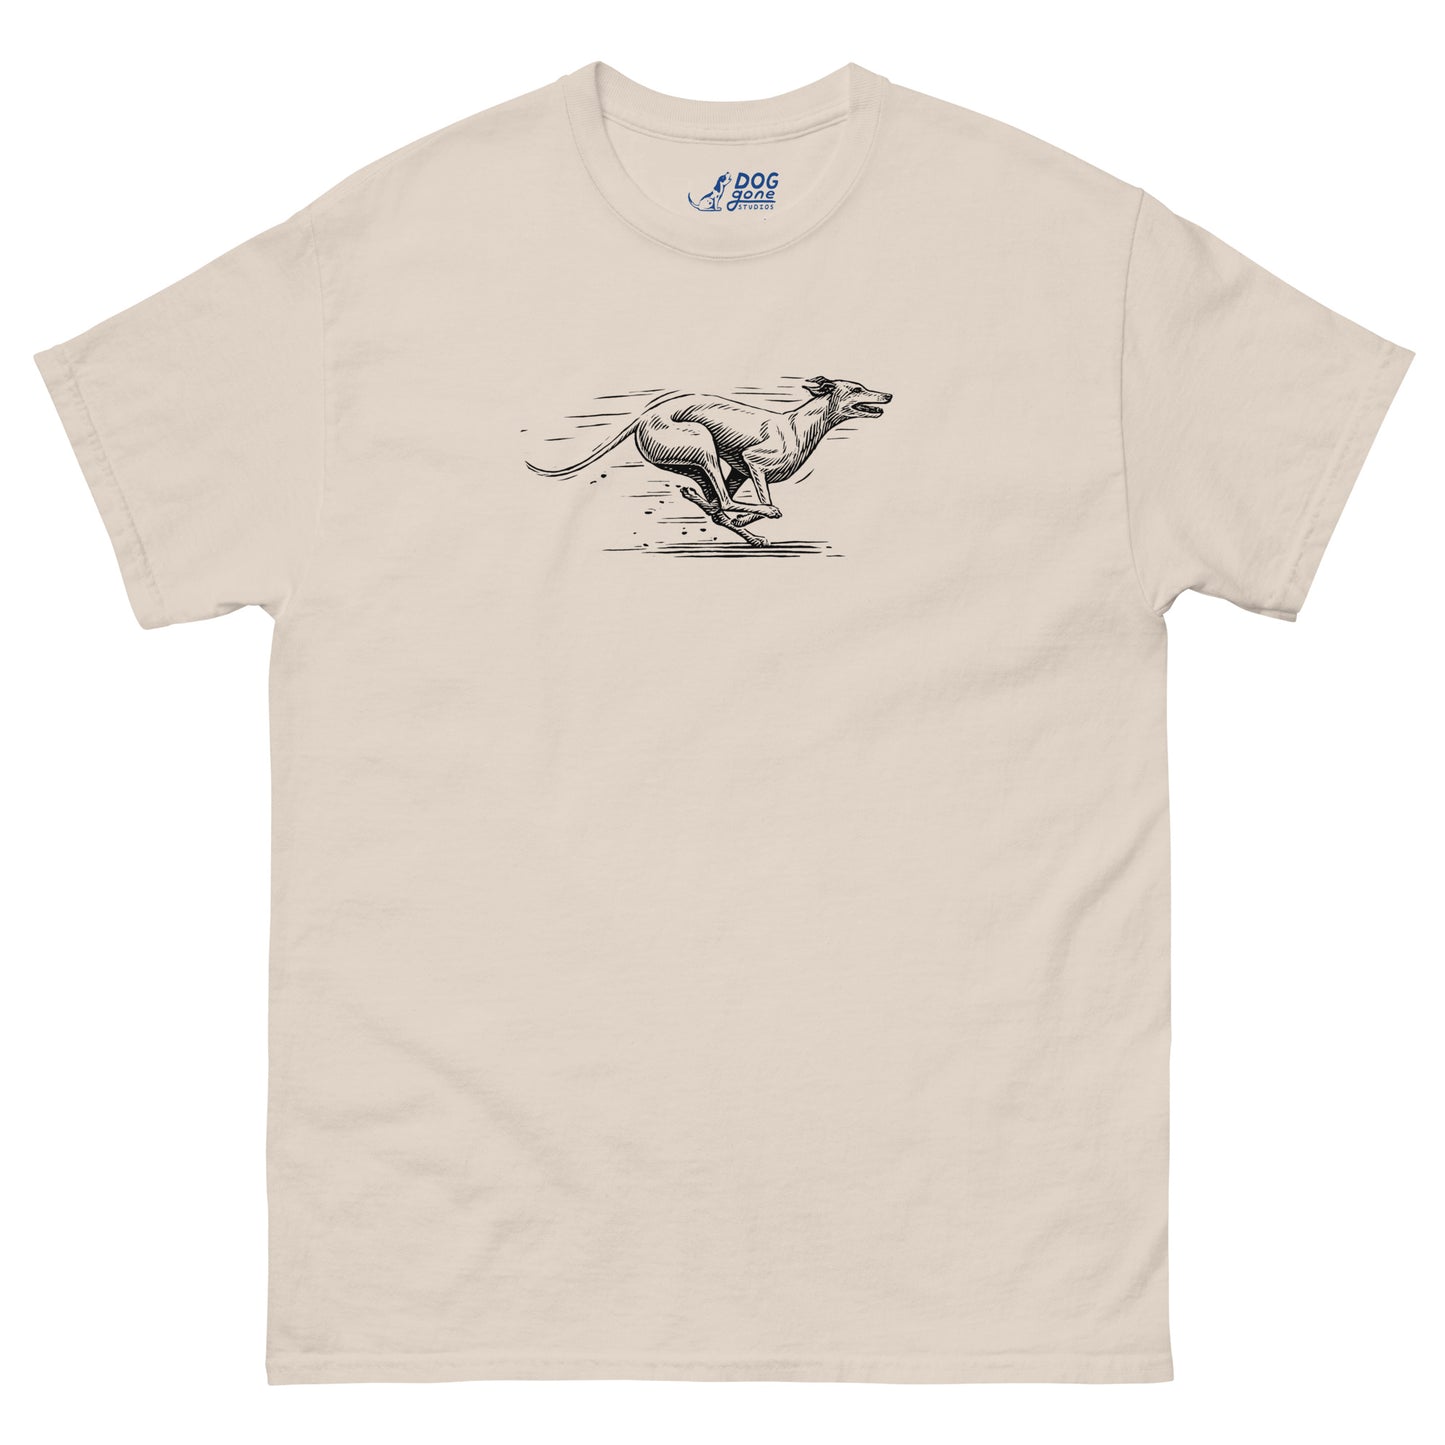 Greyhound T-Shirt